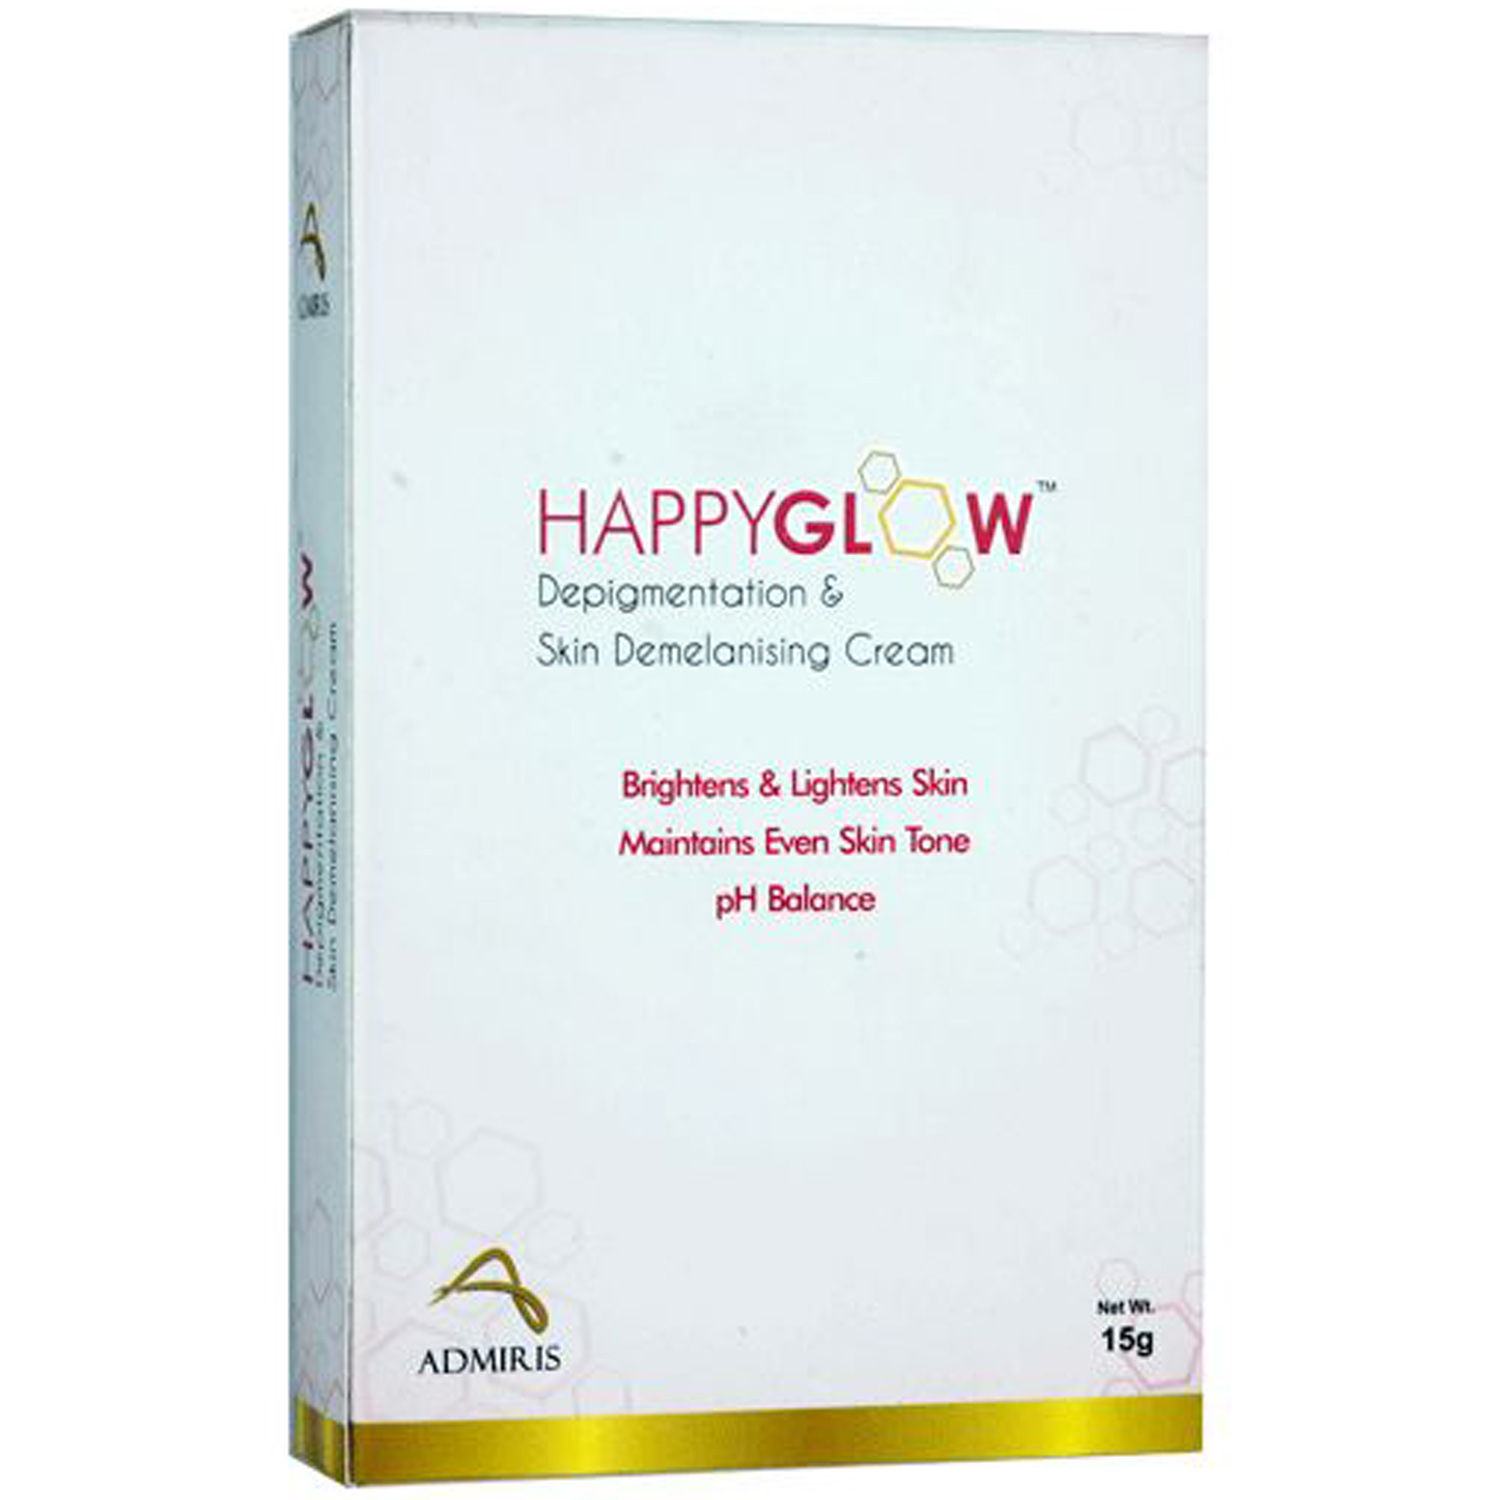 Happyglow Cream, 15 gm, Pack of 1 